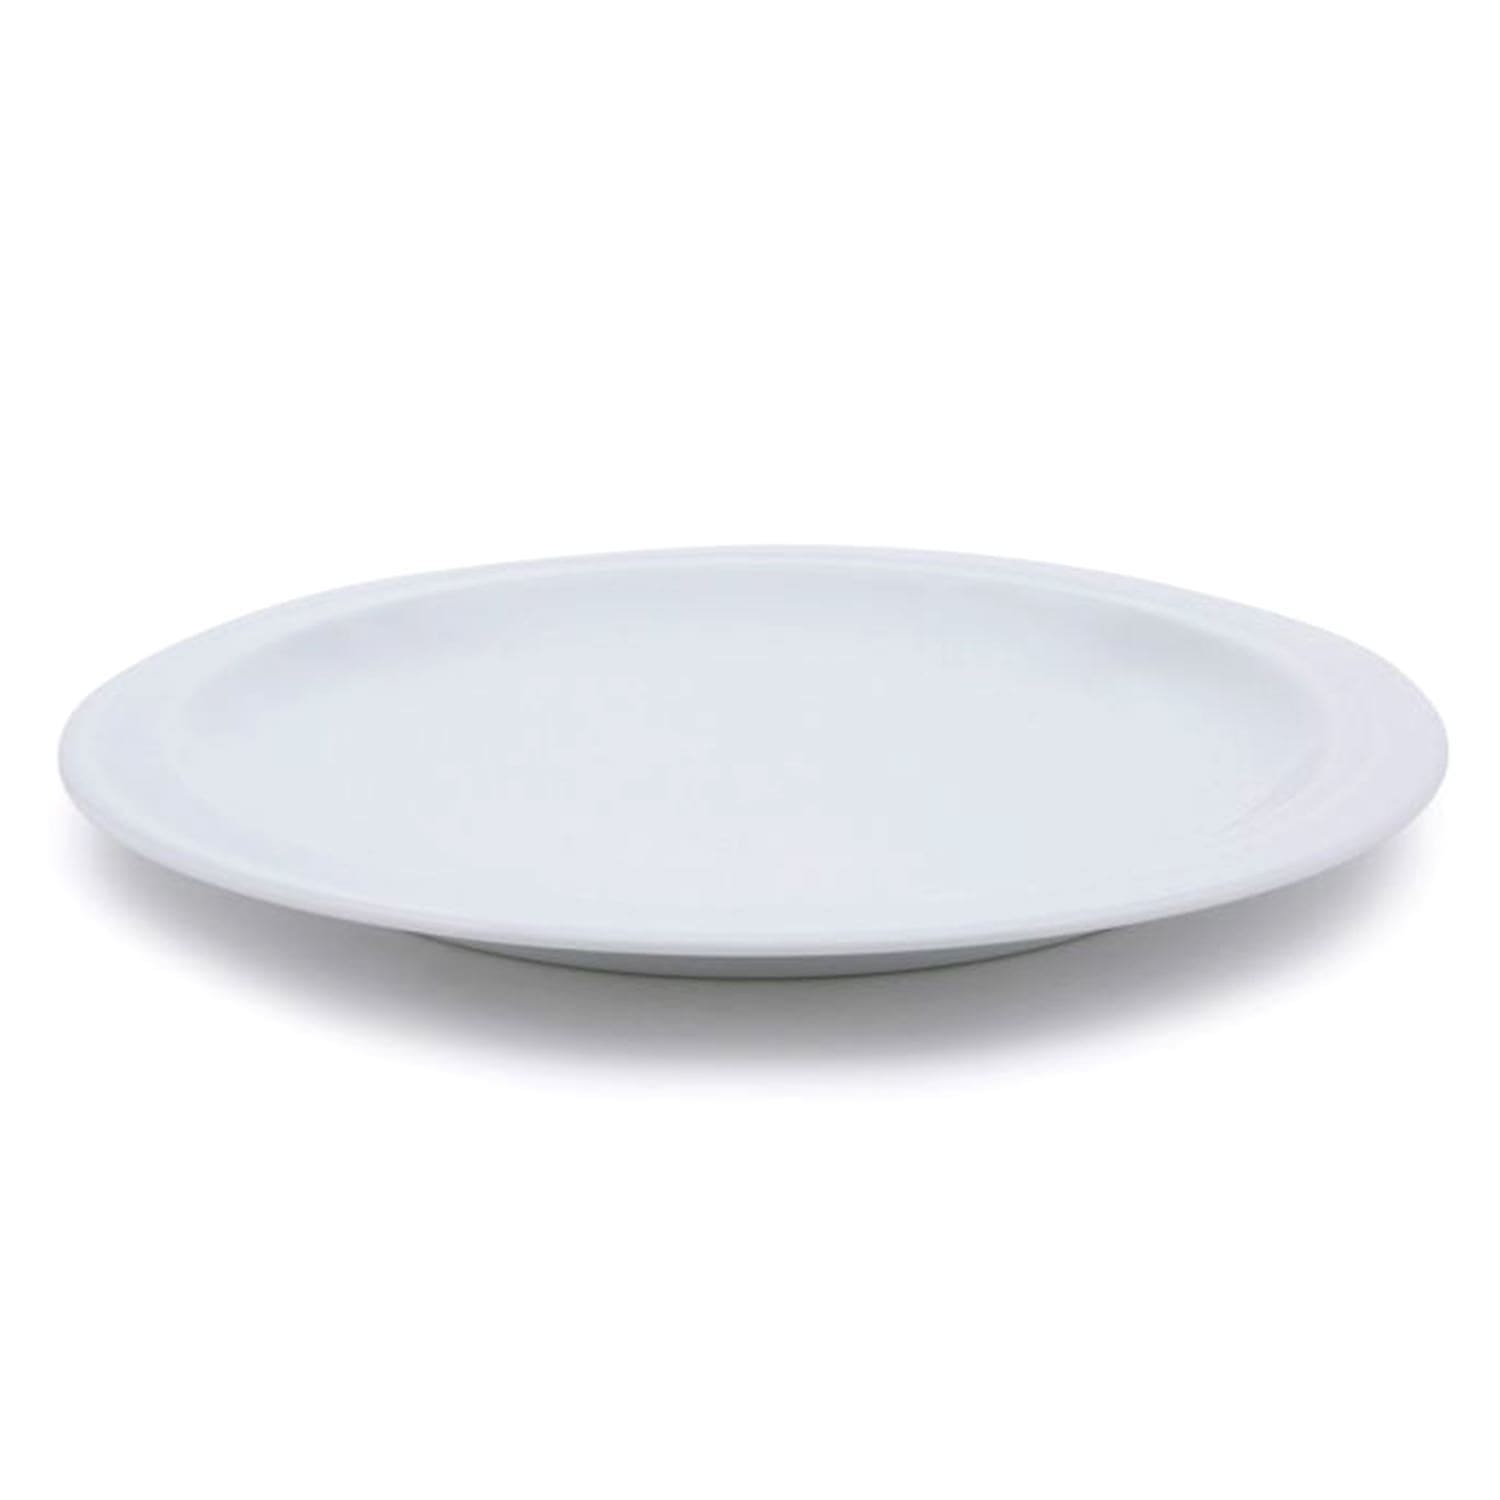 Dankotuwa Vessel Salad Plate - White, 357 g - 4111 - Jashanmal Home